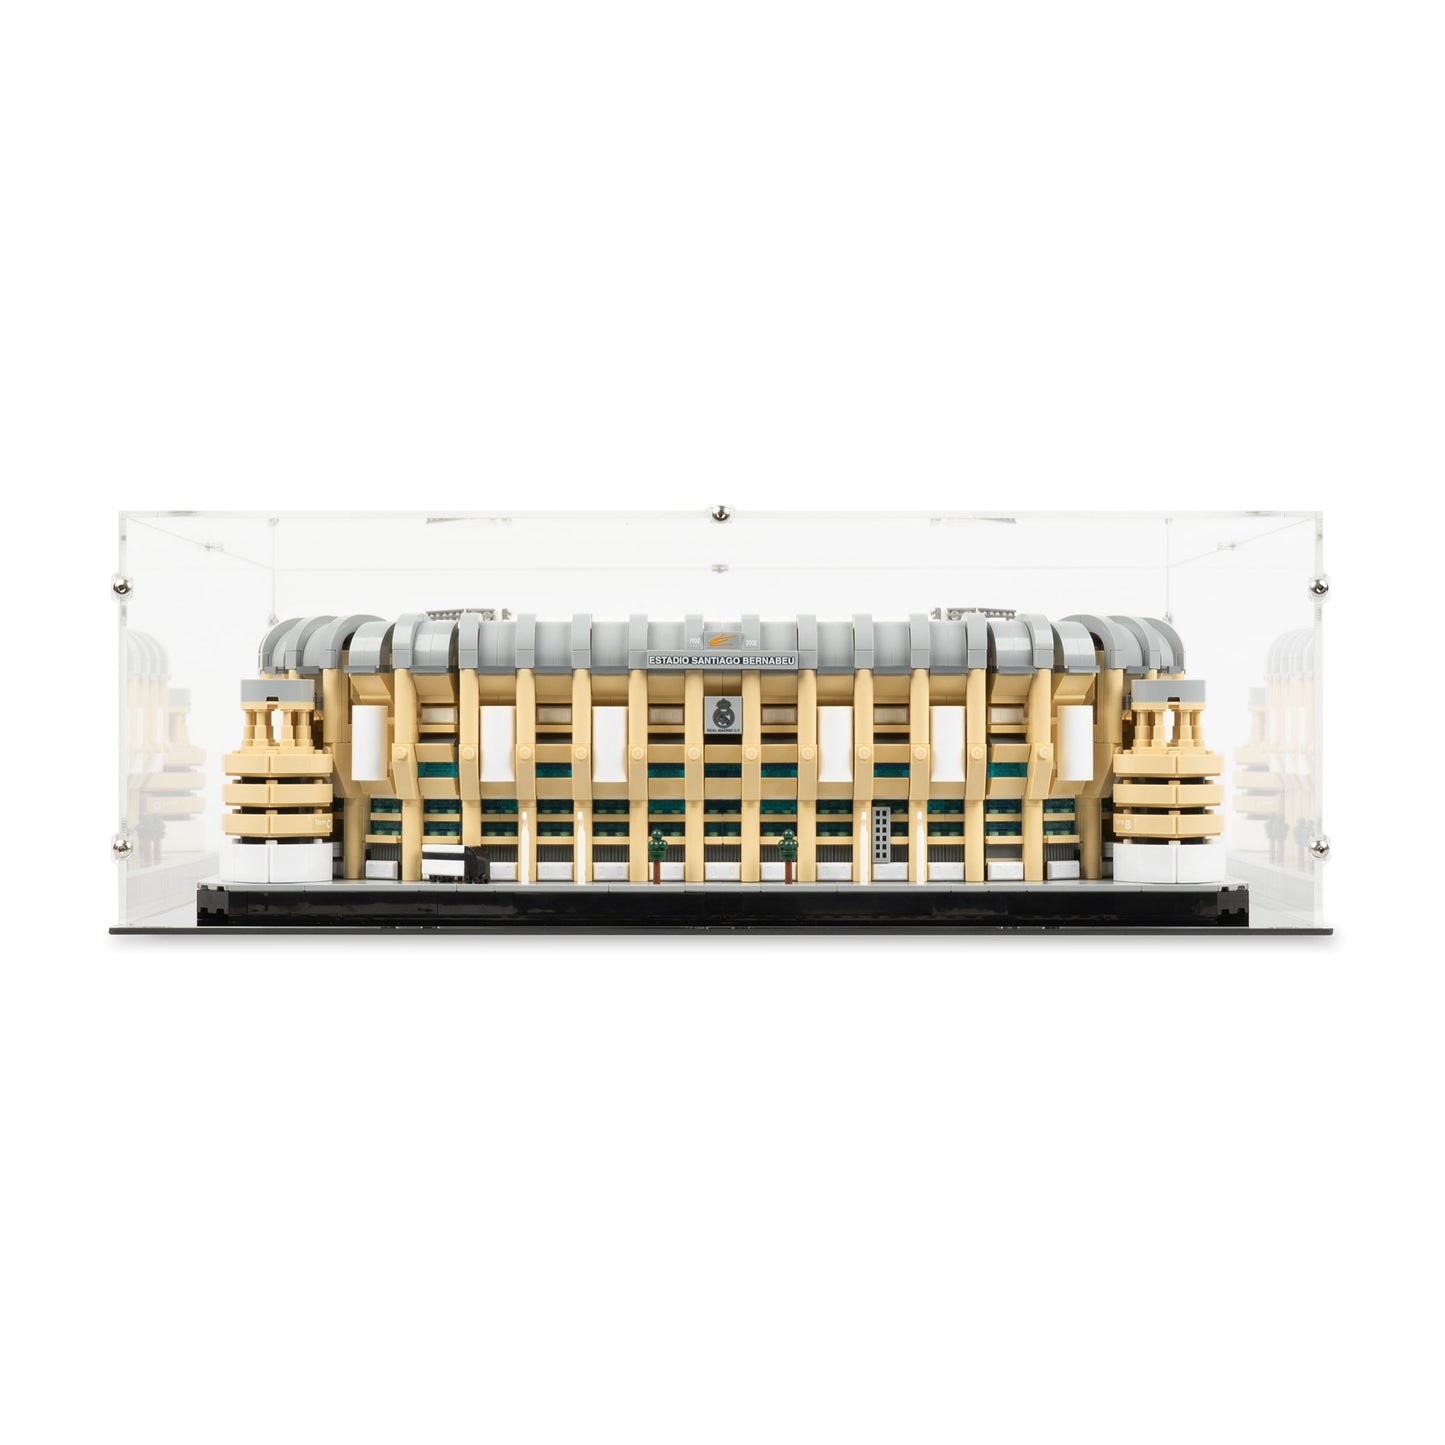 Front view of LEGO 10299 Real Madrid – Santiago Bernabéu Stadium Display Case.